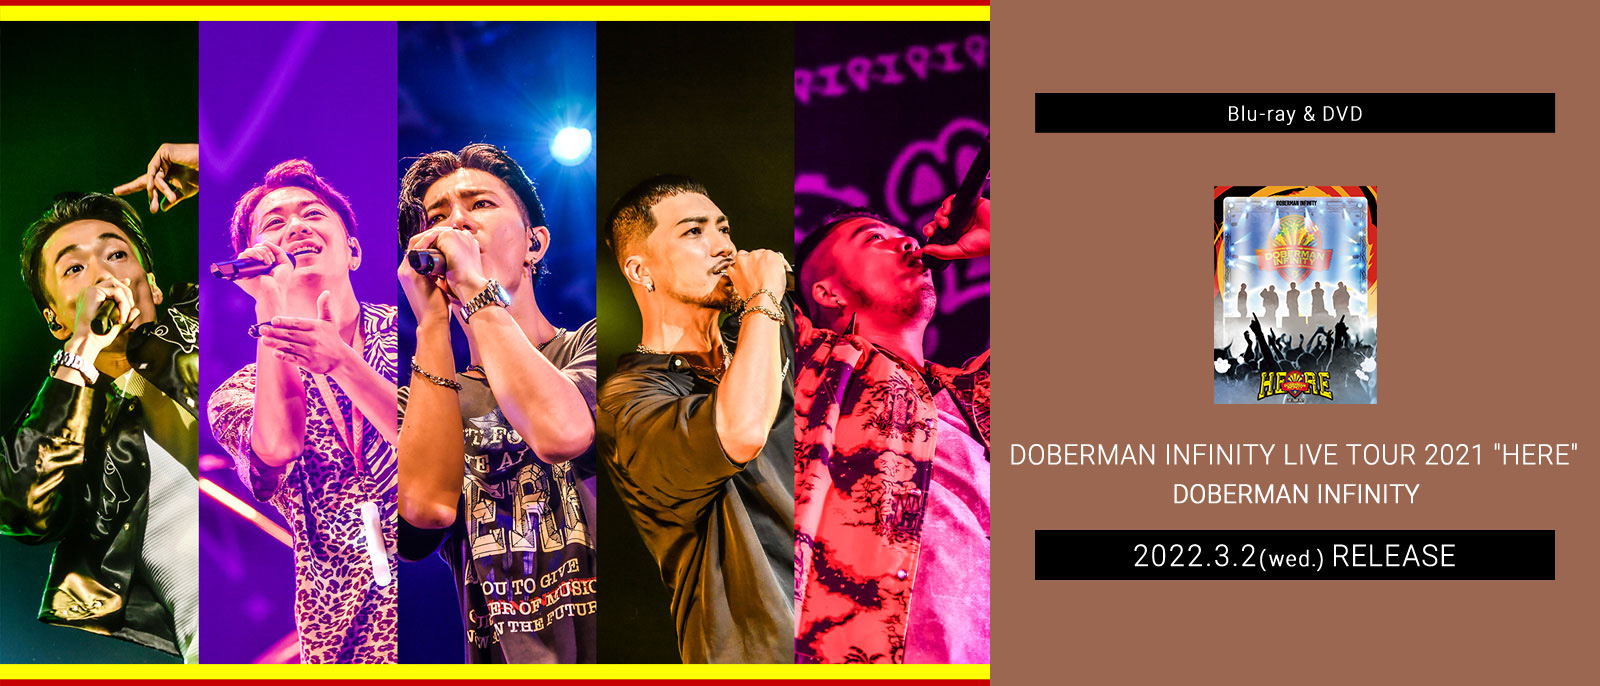 DOBERMAN INFINITY LIVE TOUR 2021 